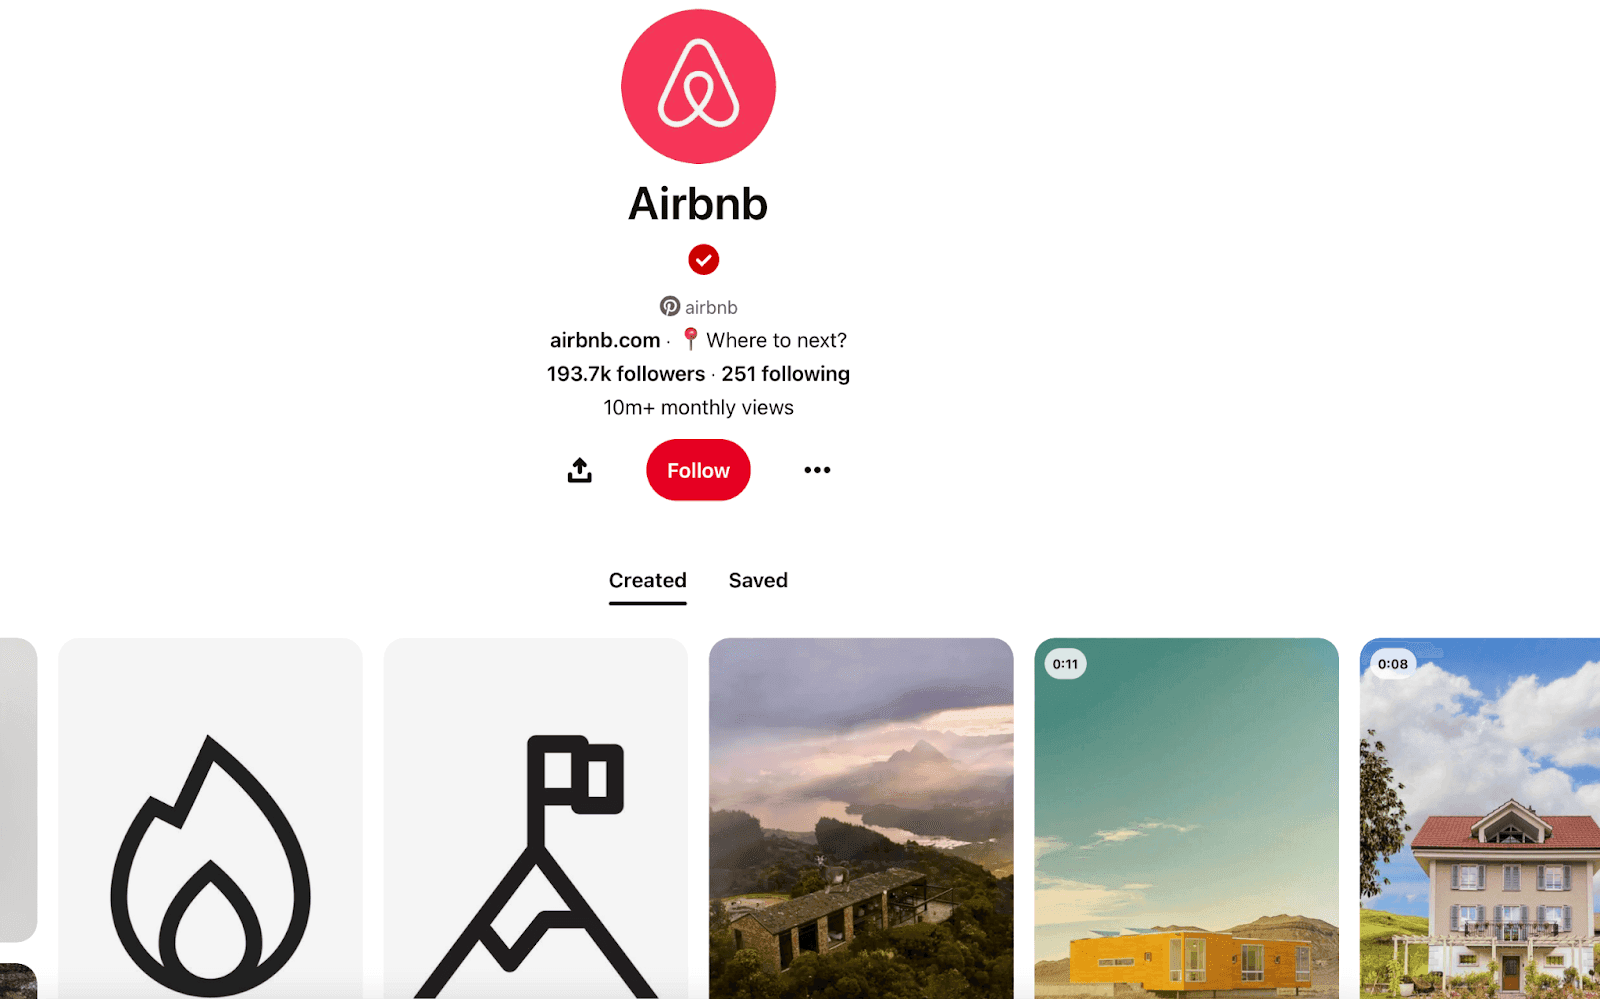 Airbnb pinterest marketing boards